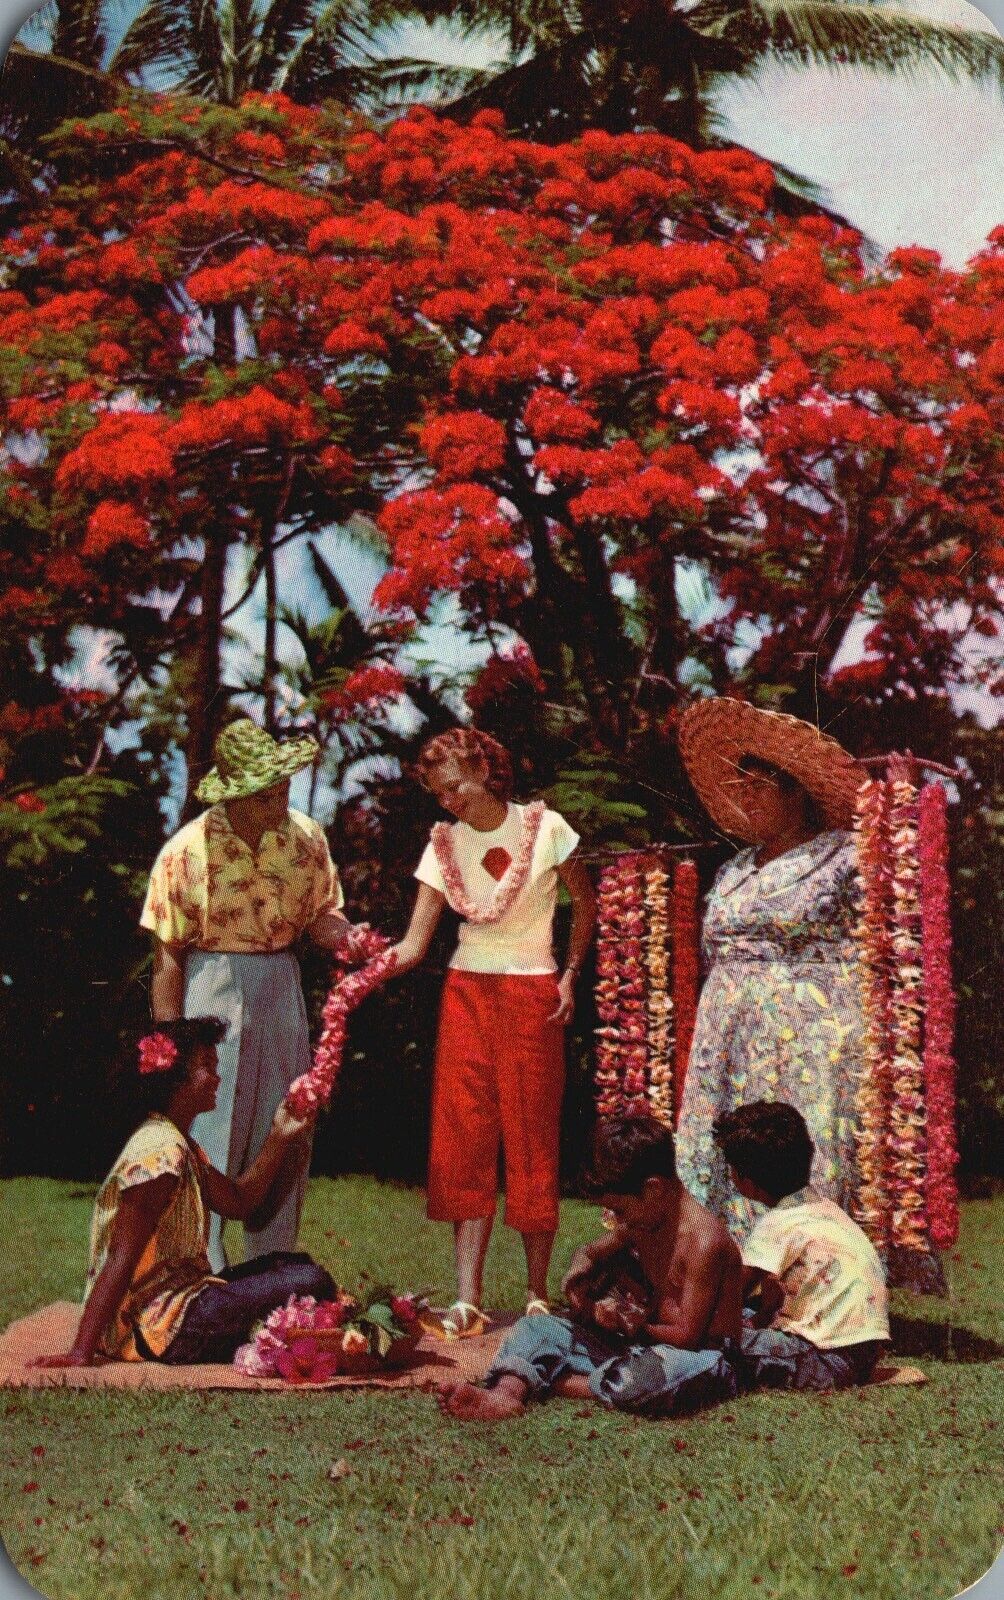 Postcard HI Lei Seller & Helpers Royal Poinciana Tree 1954 Vintage PC G8230